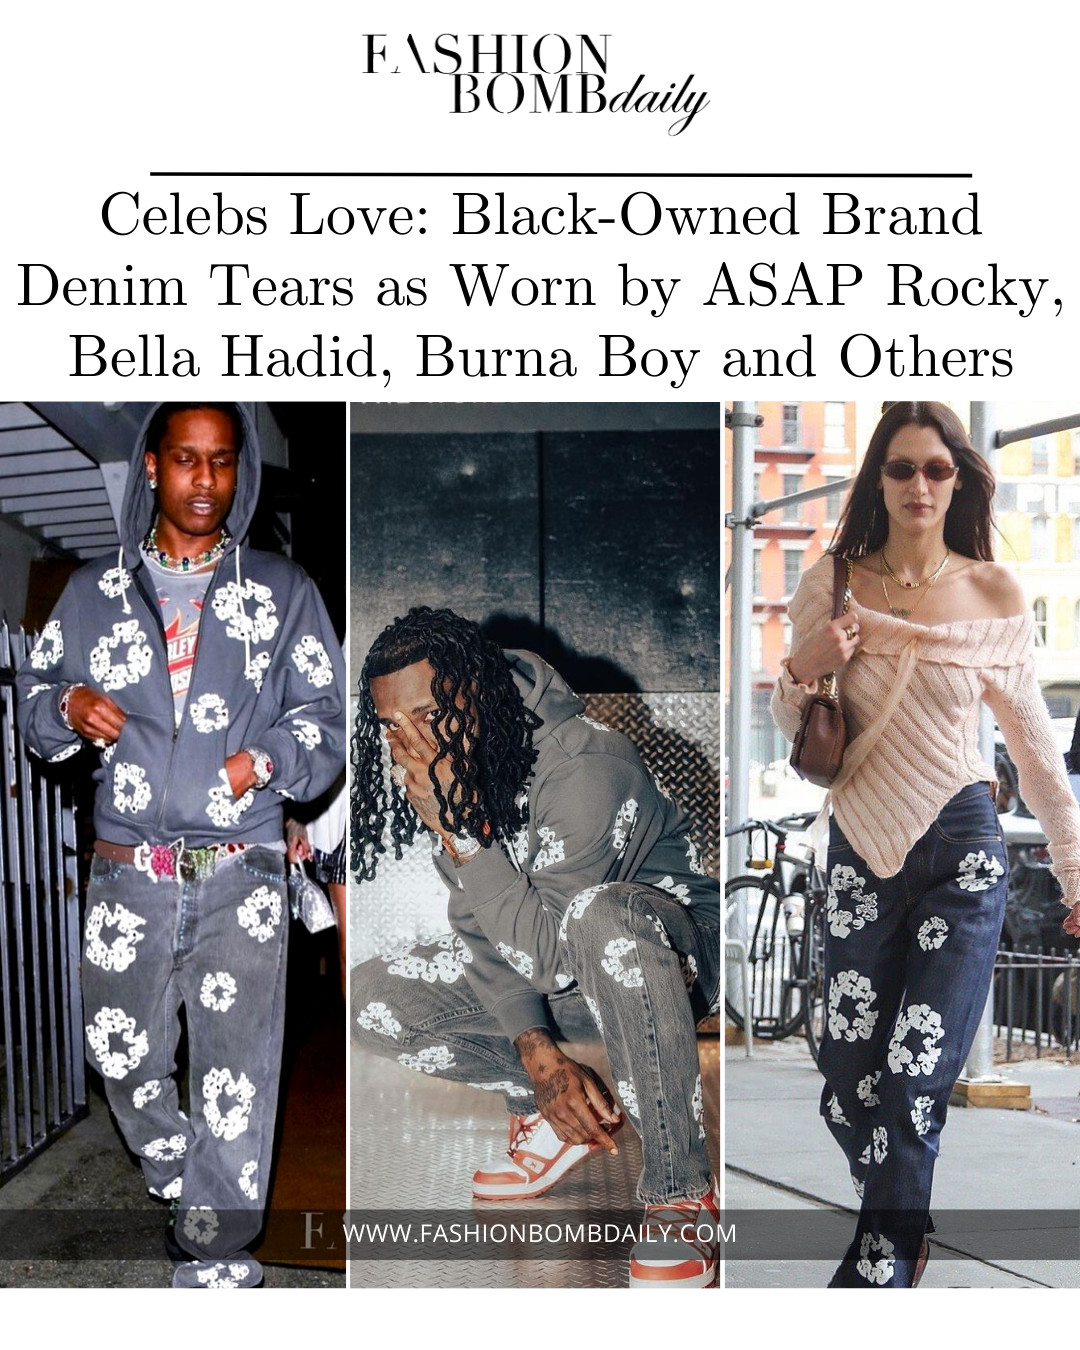 Celebs Love: Black-Owned Brand Denim Tears as Worn by A$AP Rocky